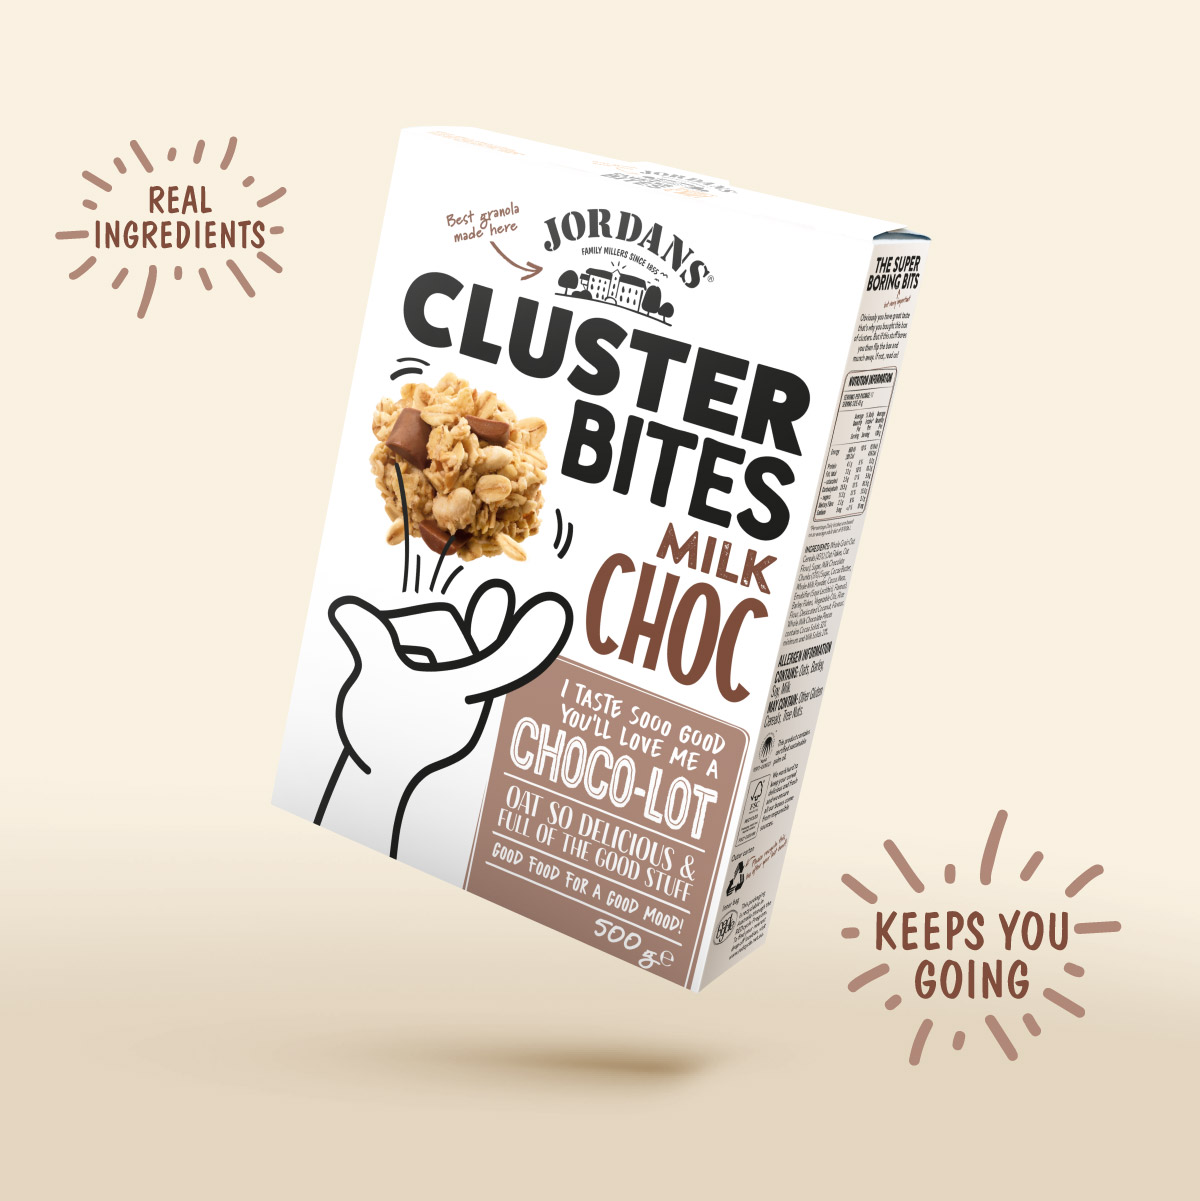 Jordans Cluster Bites Teenage Cereal Brand Identity Packaging